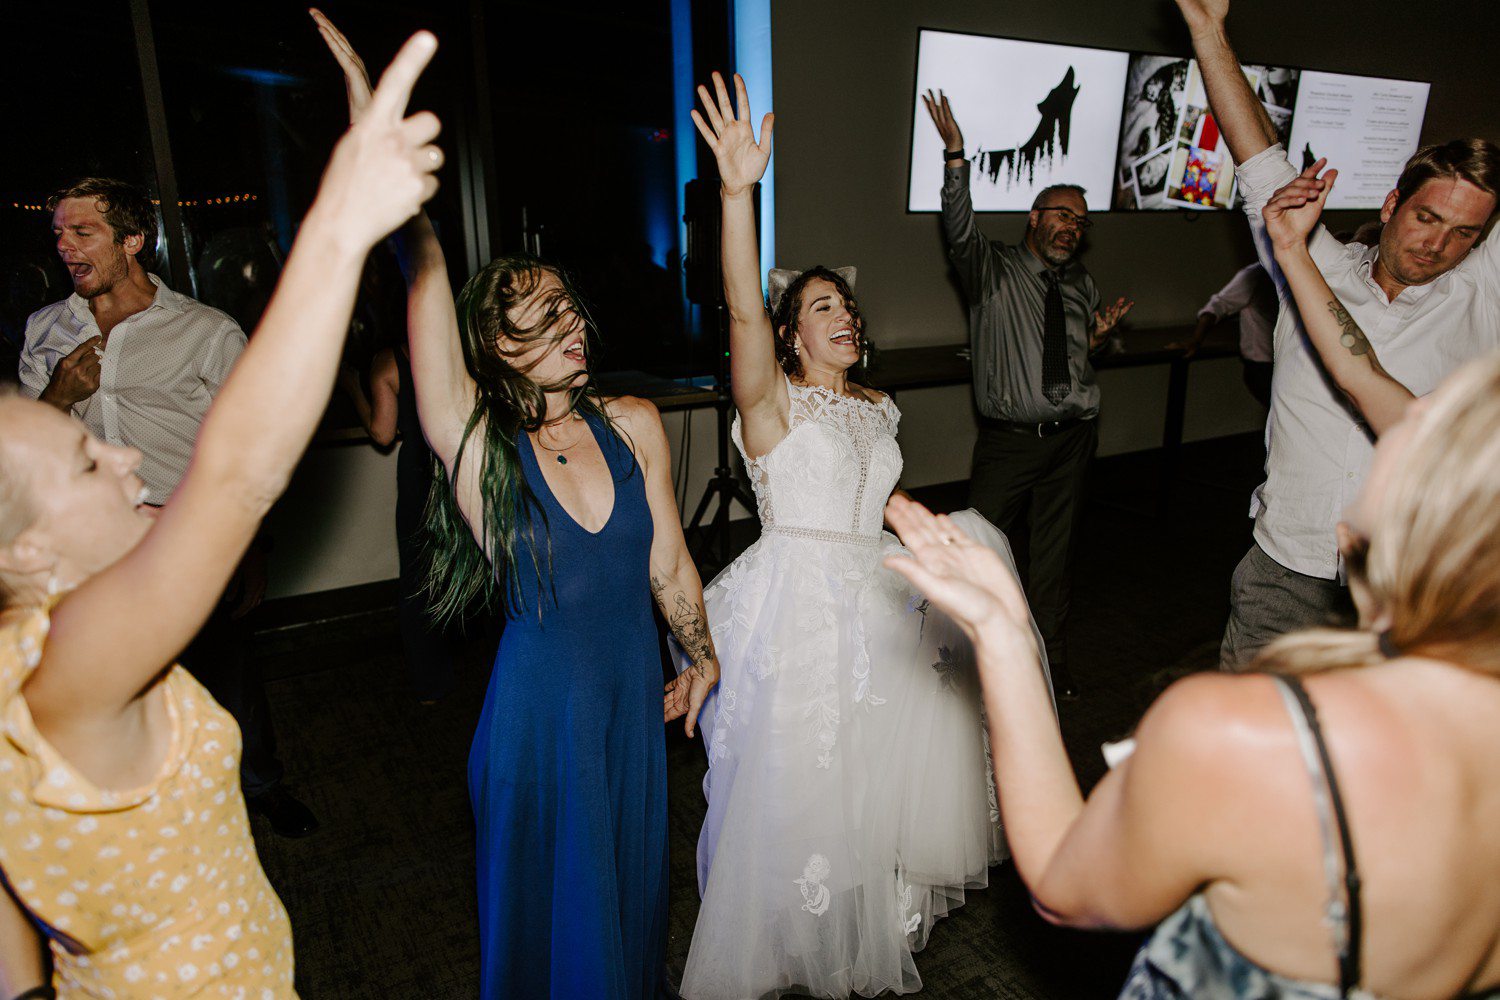 Dancing at wedding reception